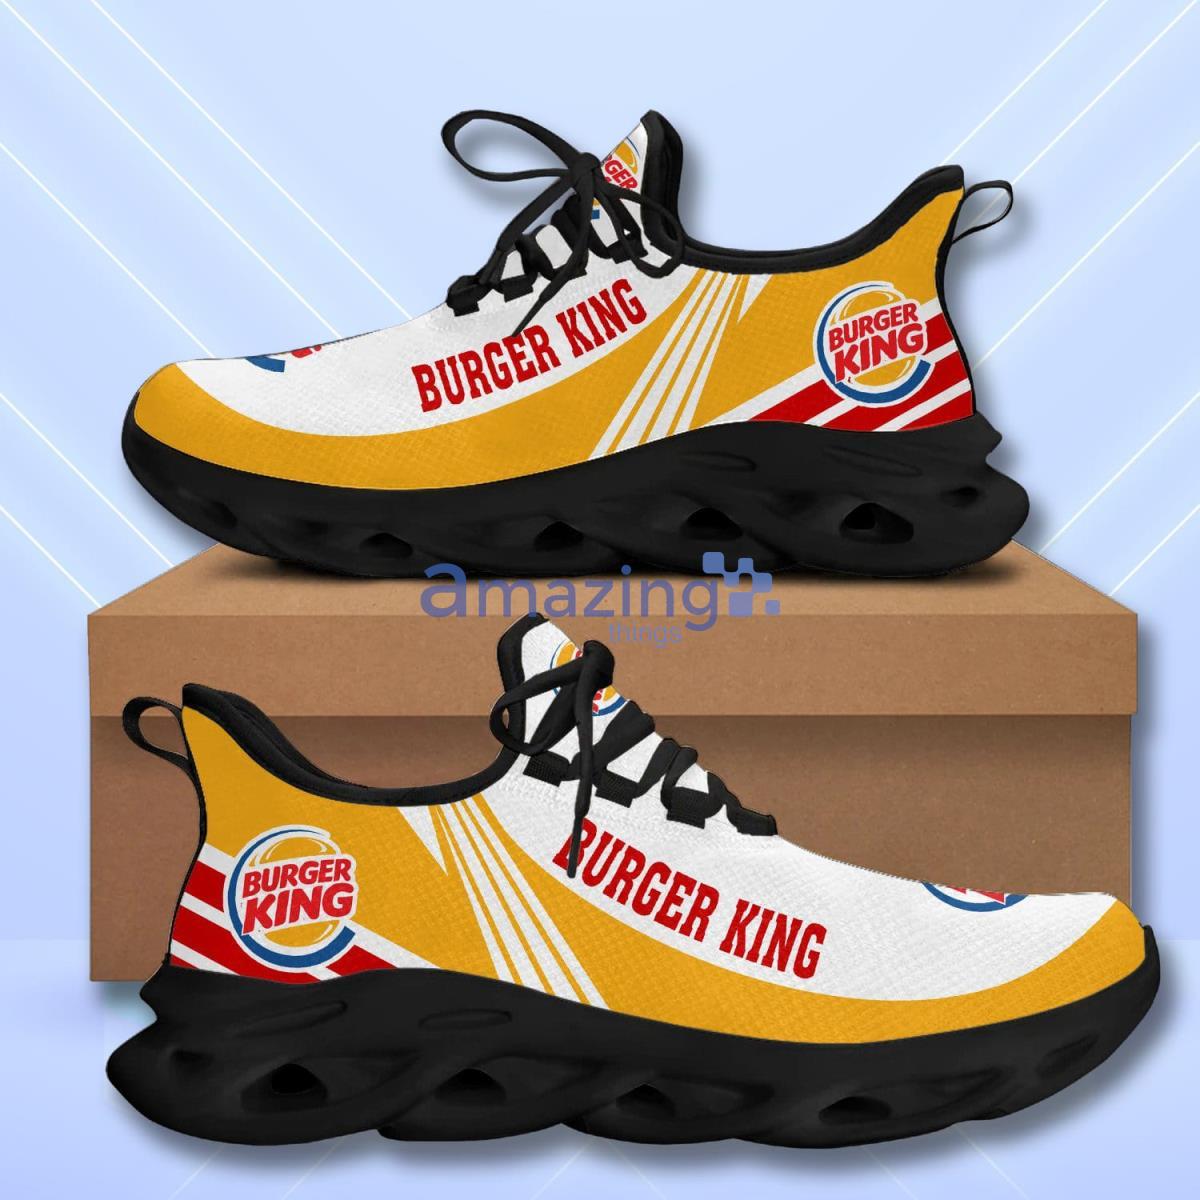 Burger King Max Soul Shoes Hot Trending Gift For Men Women Product Photo 1